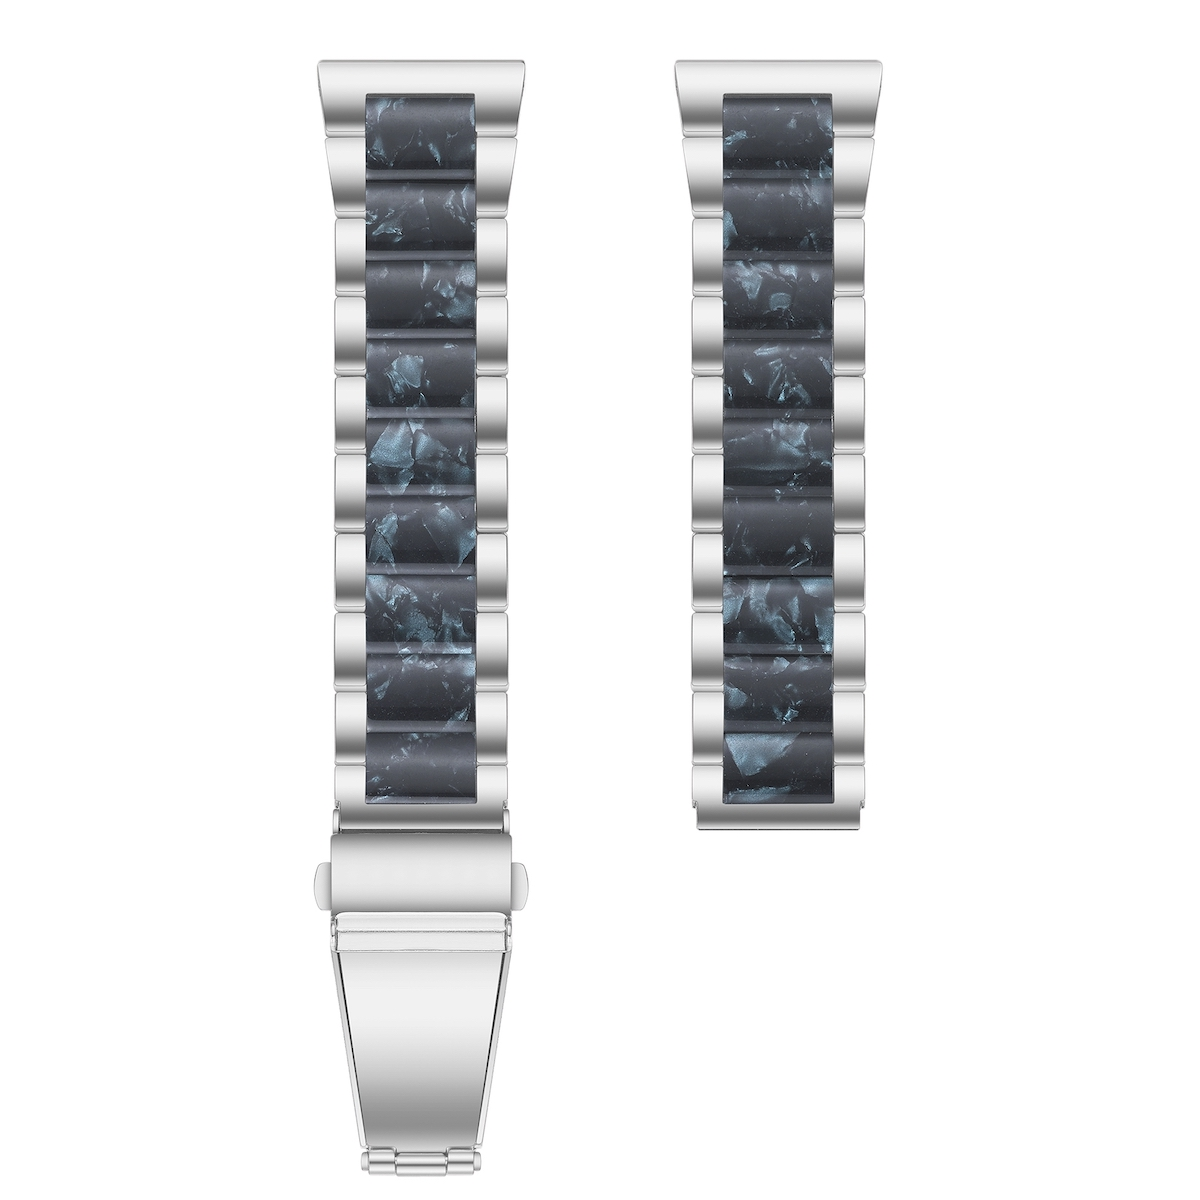 WIGENTO Design mm, 5 / 4 Metall mm / 46 Samsung, 47 44 / / Glieder Pro / 6 45mm / Watch / 42 Band, Silber Galaxy Blau Watch 43 4 Watch Ersatzarmband, mm 5 Classic 40 6